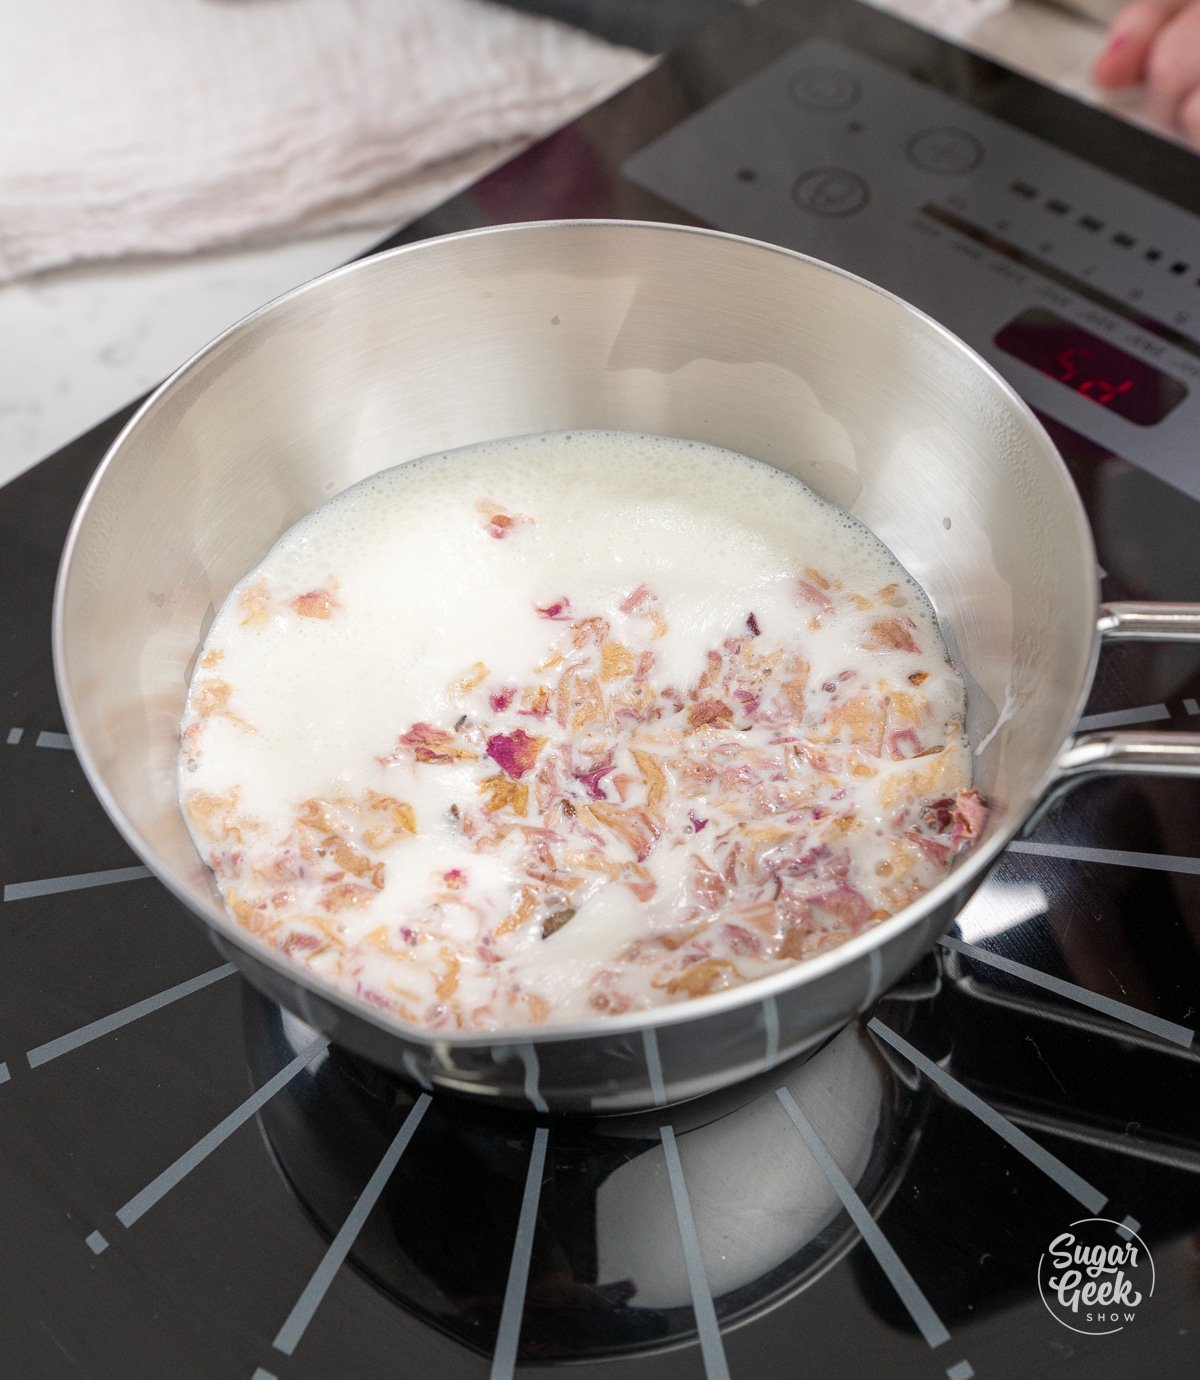 rose petal infused cream steaming in a saucepan